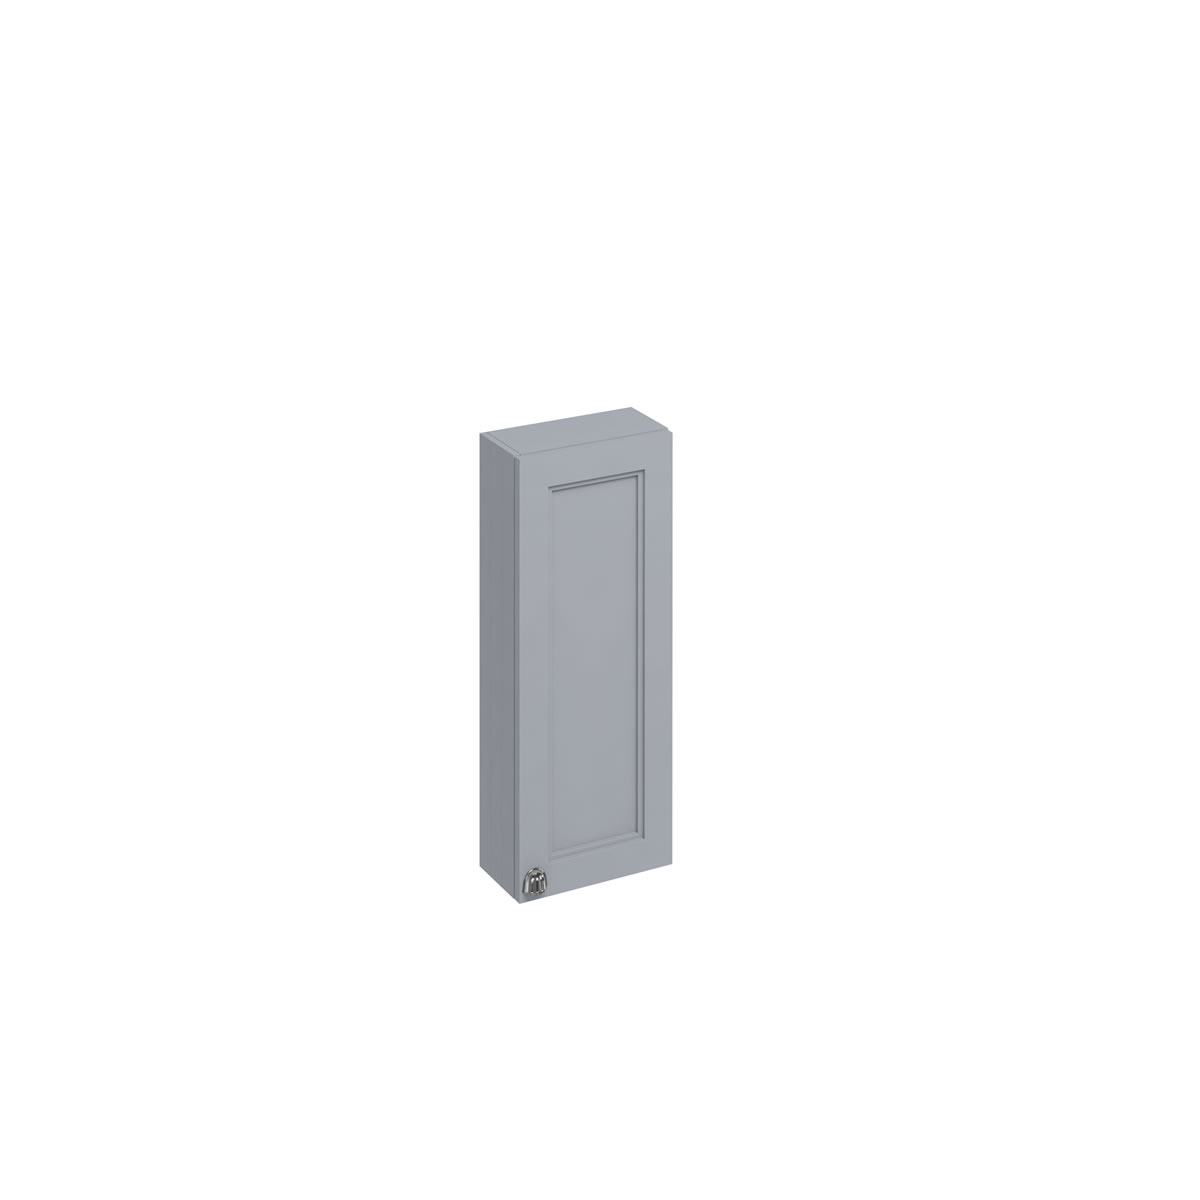 30 Single Door Wall Unit -Classic Grey